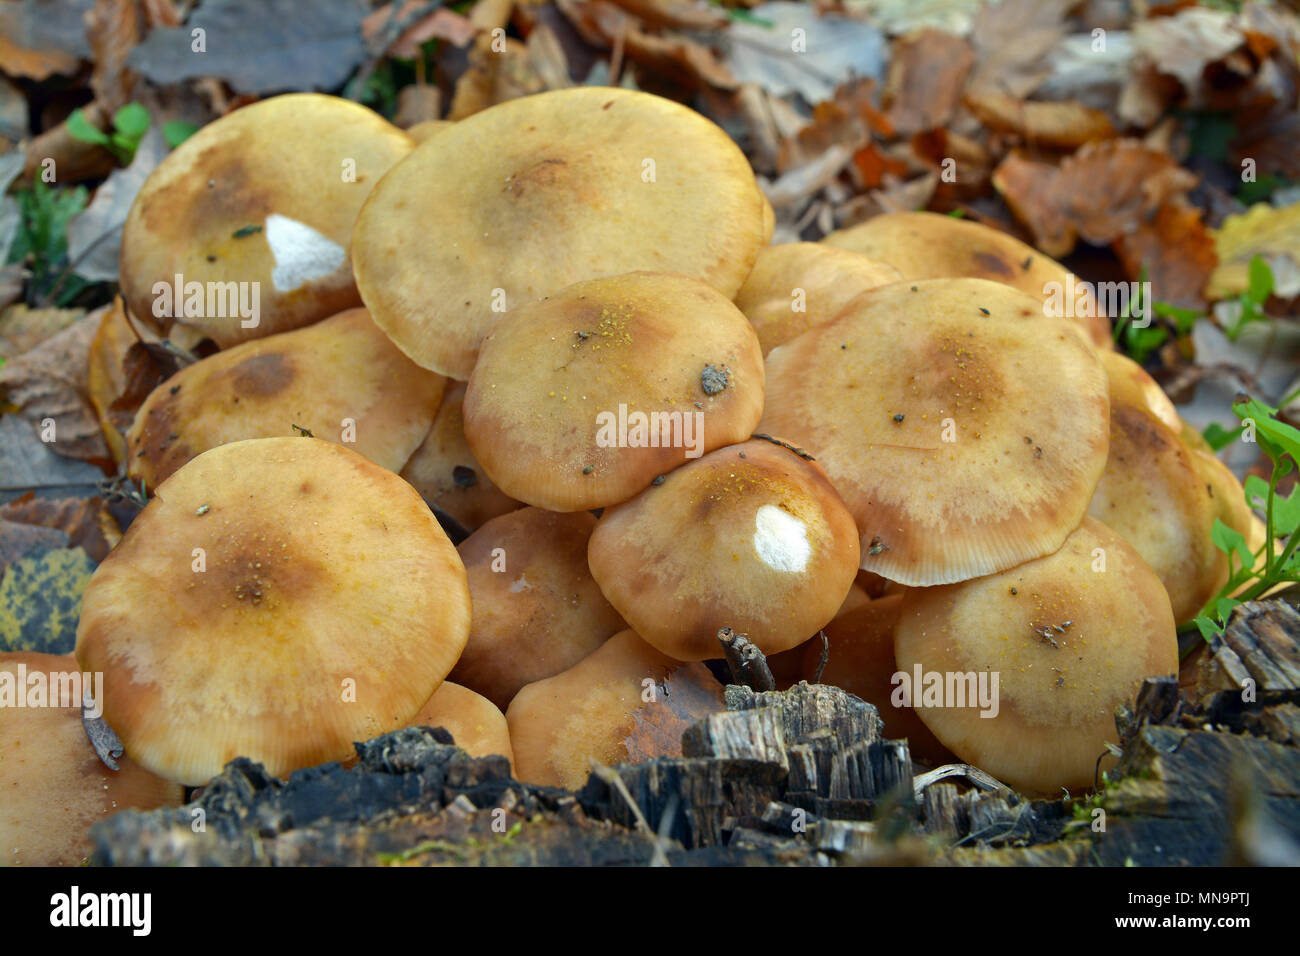 armillaria gallica mushroom cluster on a tree stump Stock Photo